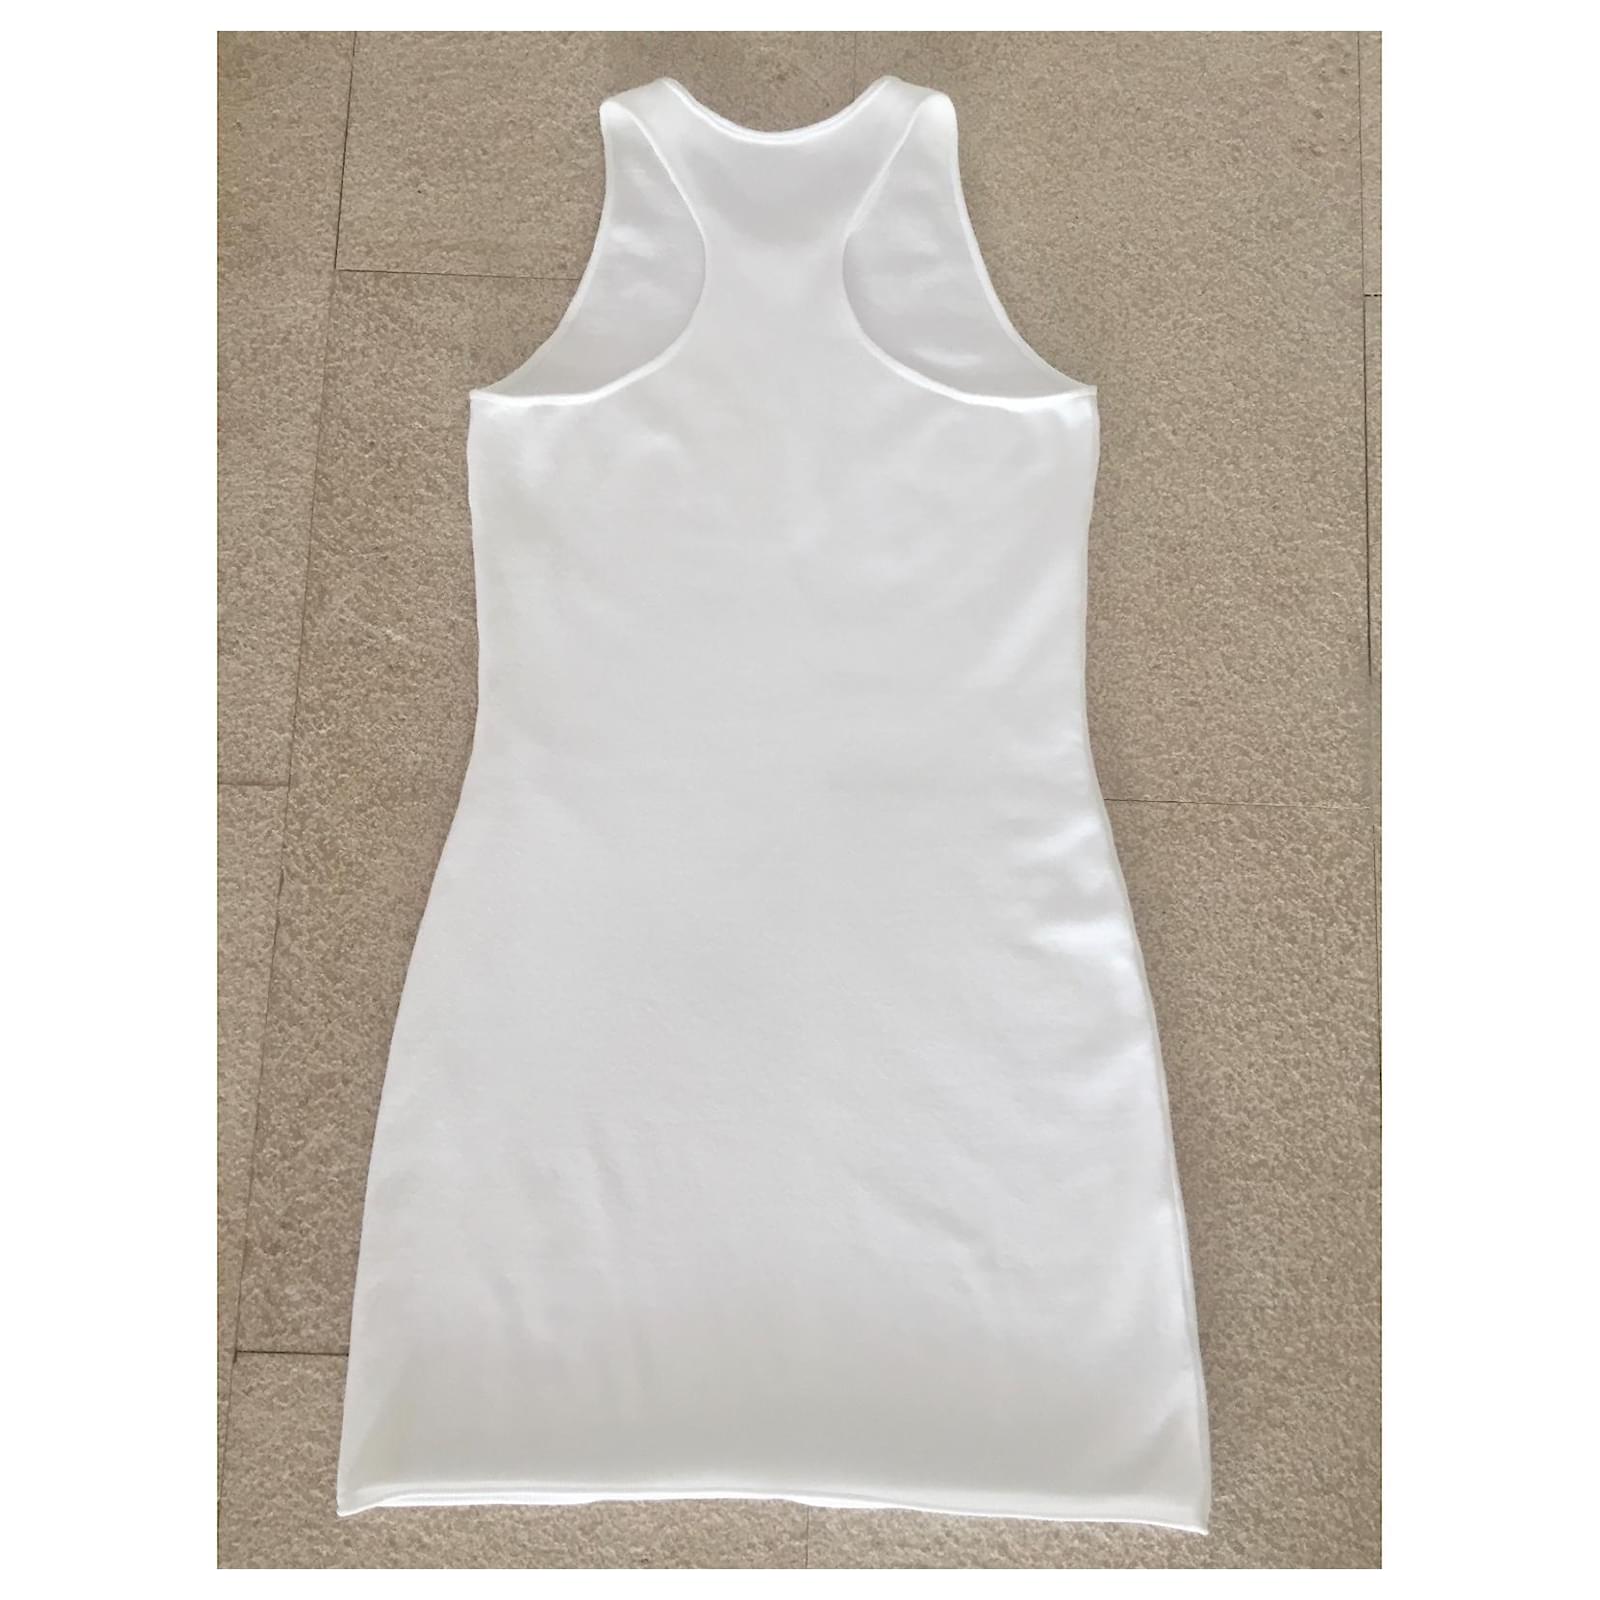 Dresses Chanel White Viscose-Polyester Knit Mini Tank Top Dress Size Xs - S